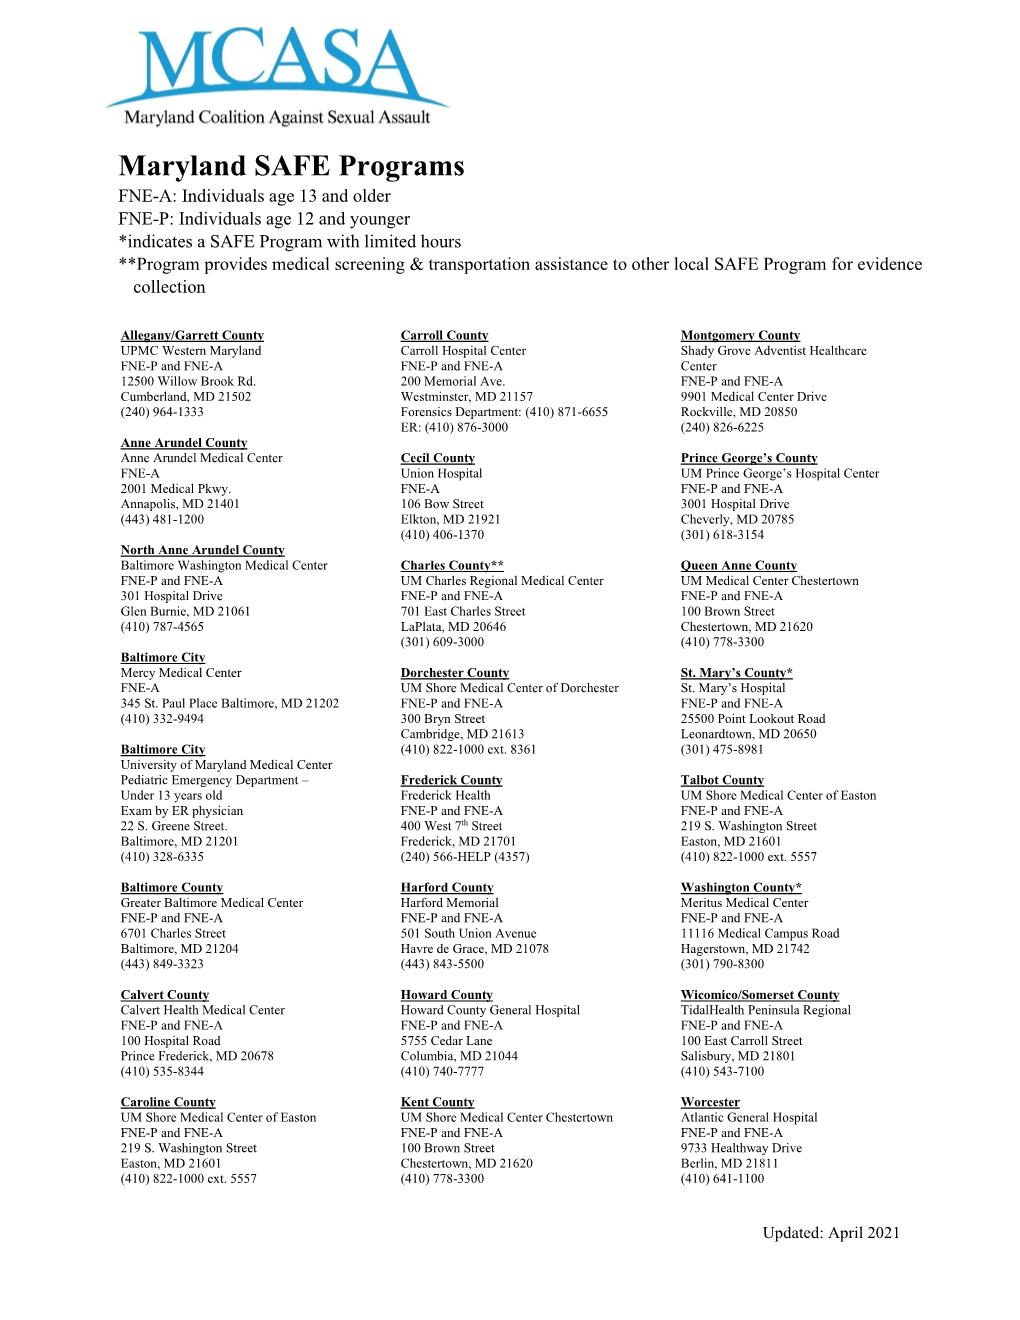 Maryland SAFE Programs